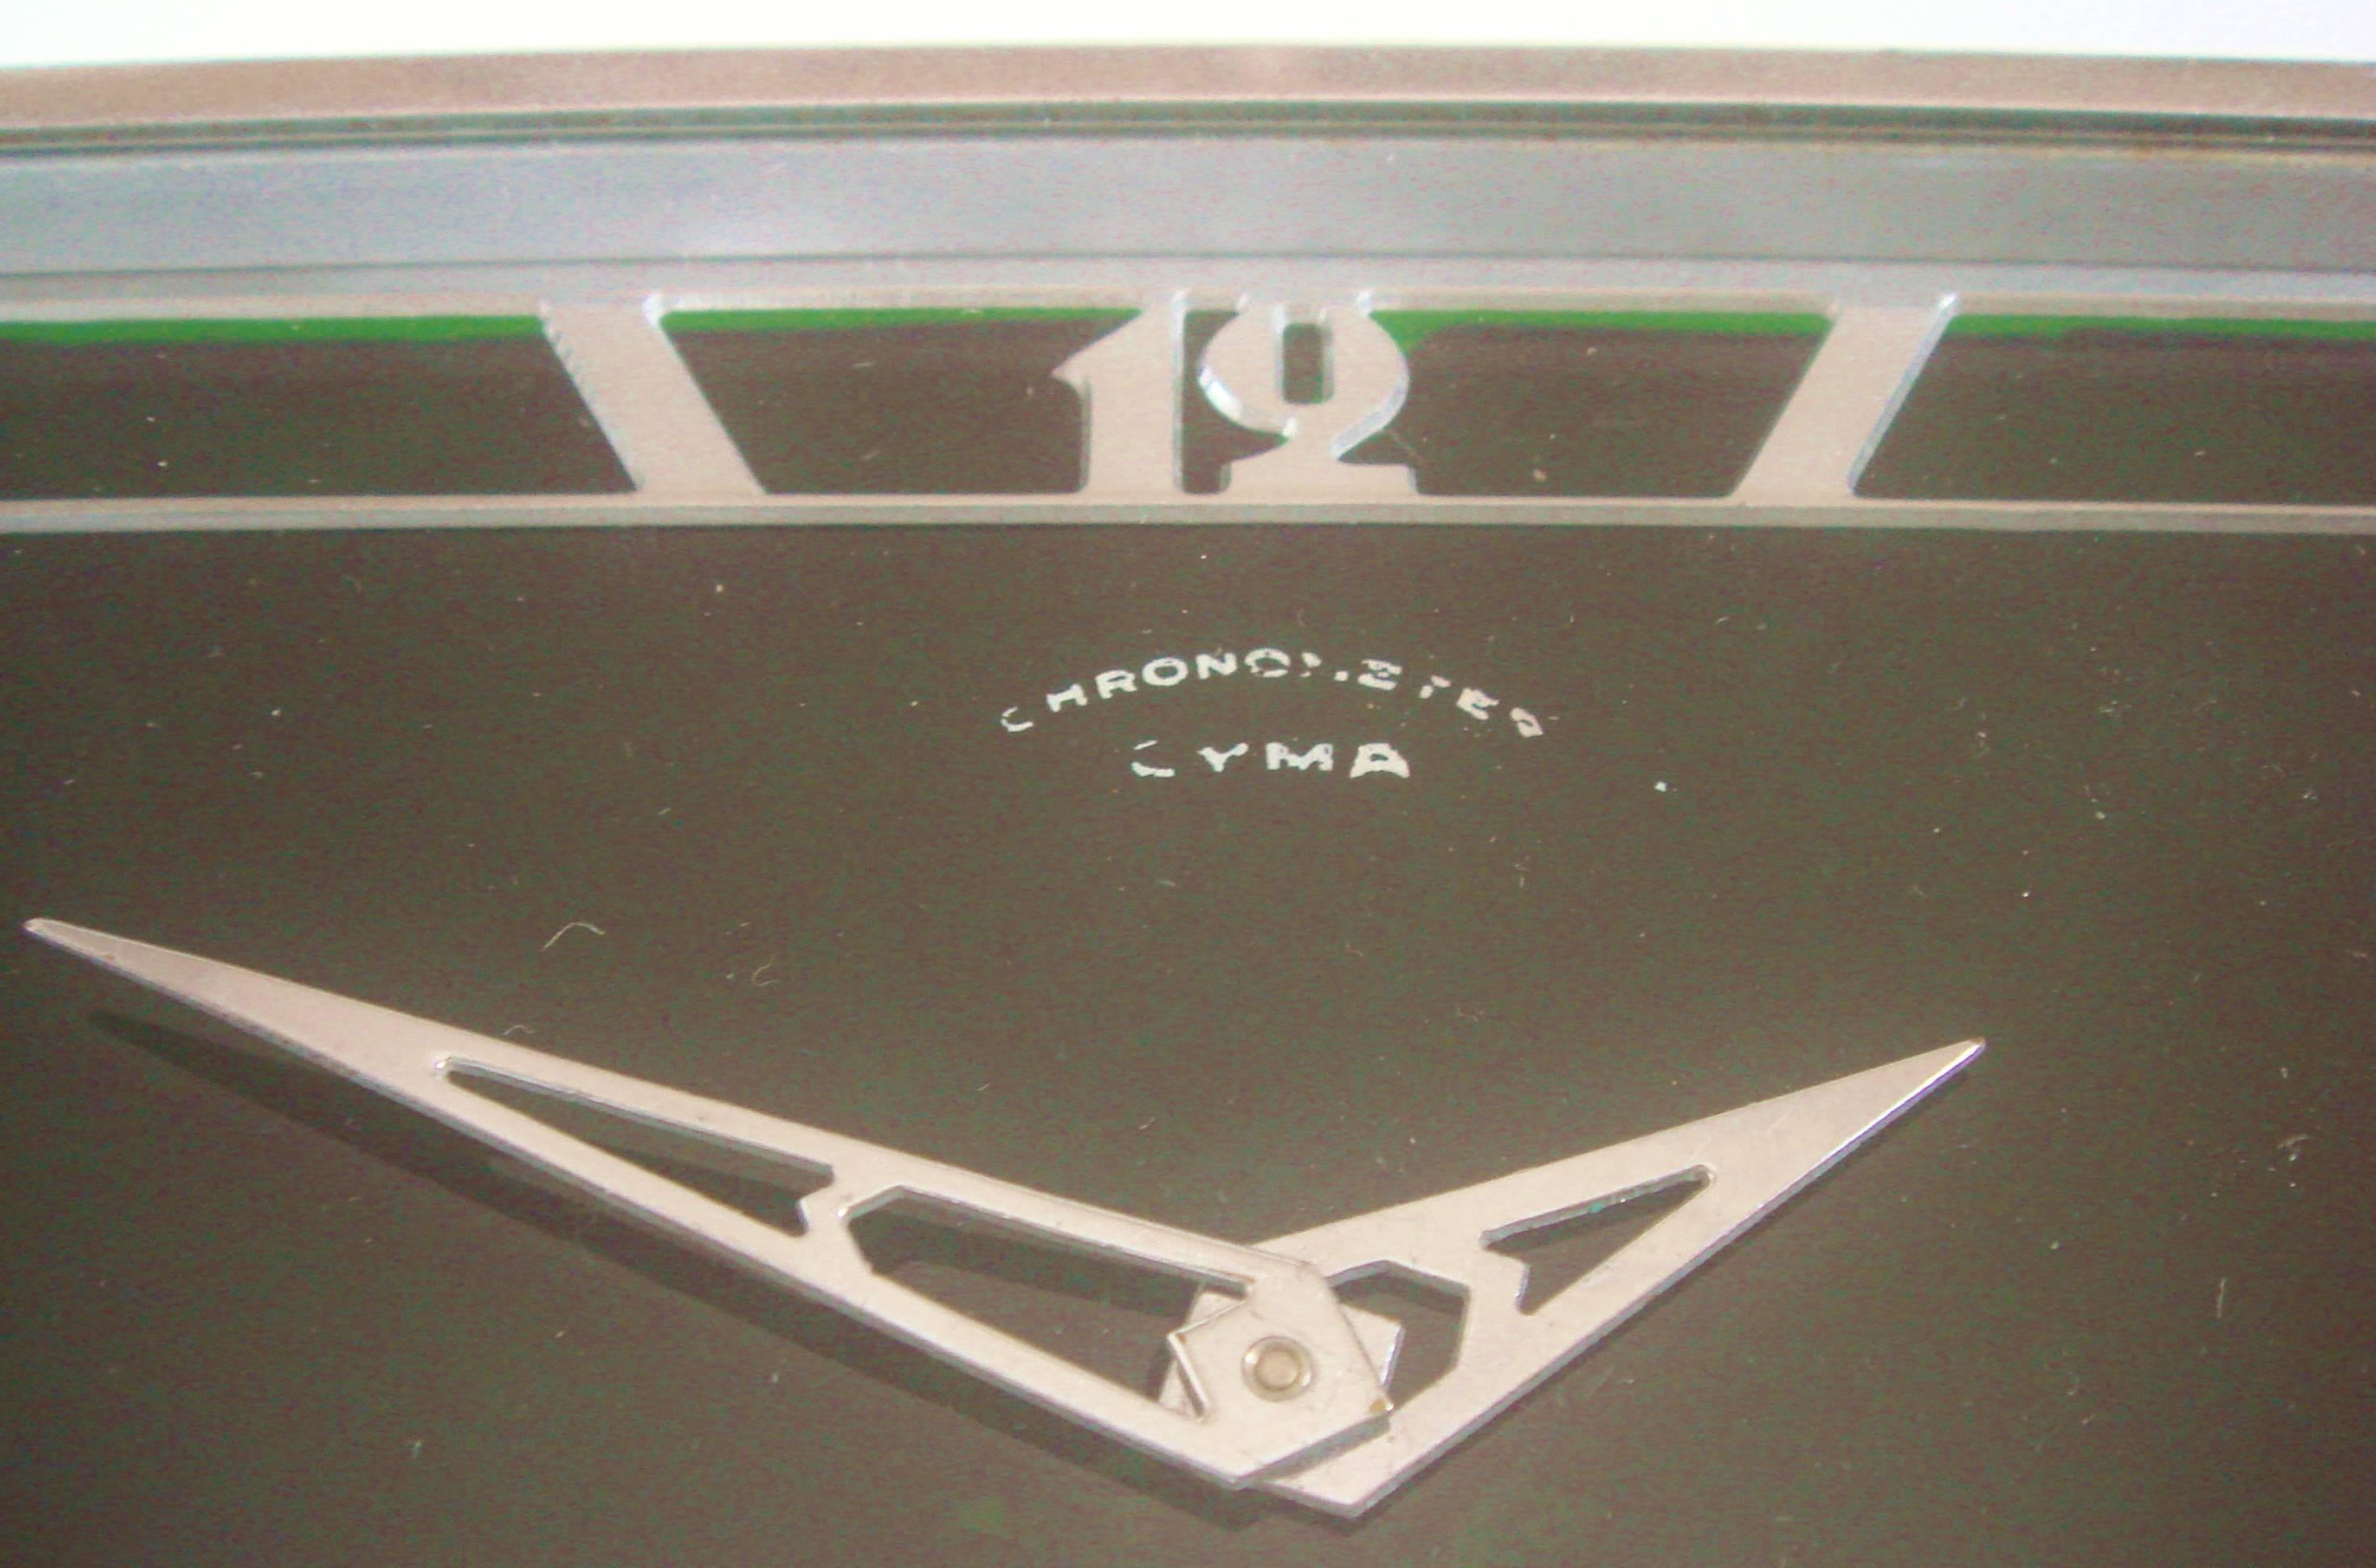 Plated Stunning Swiss Art Deco Chrome and Glass Mechanical Desk Chronometer by CYMA 